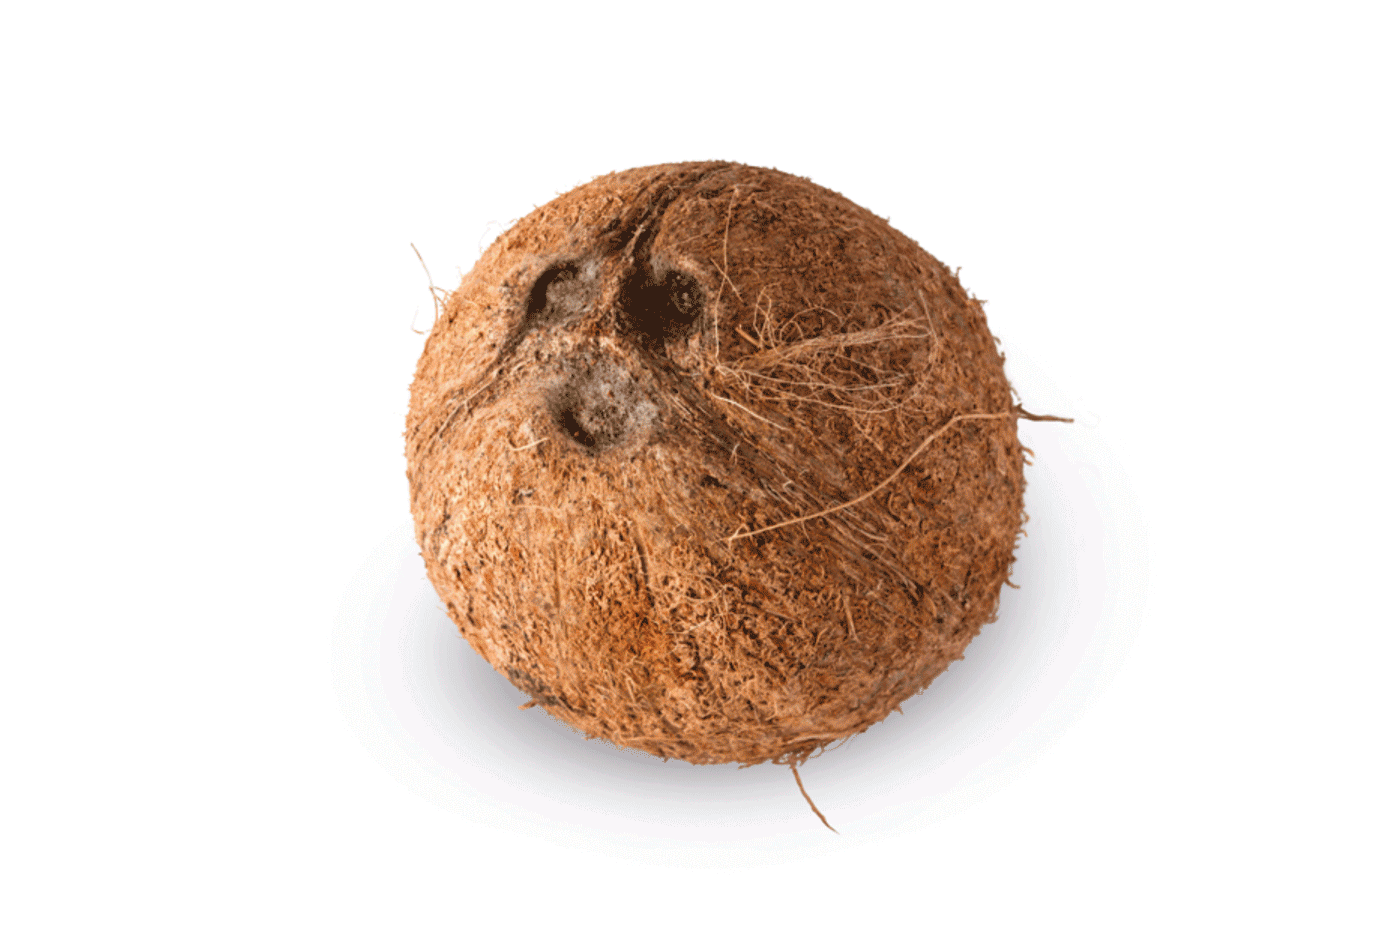 coconut animated gif